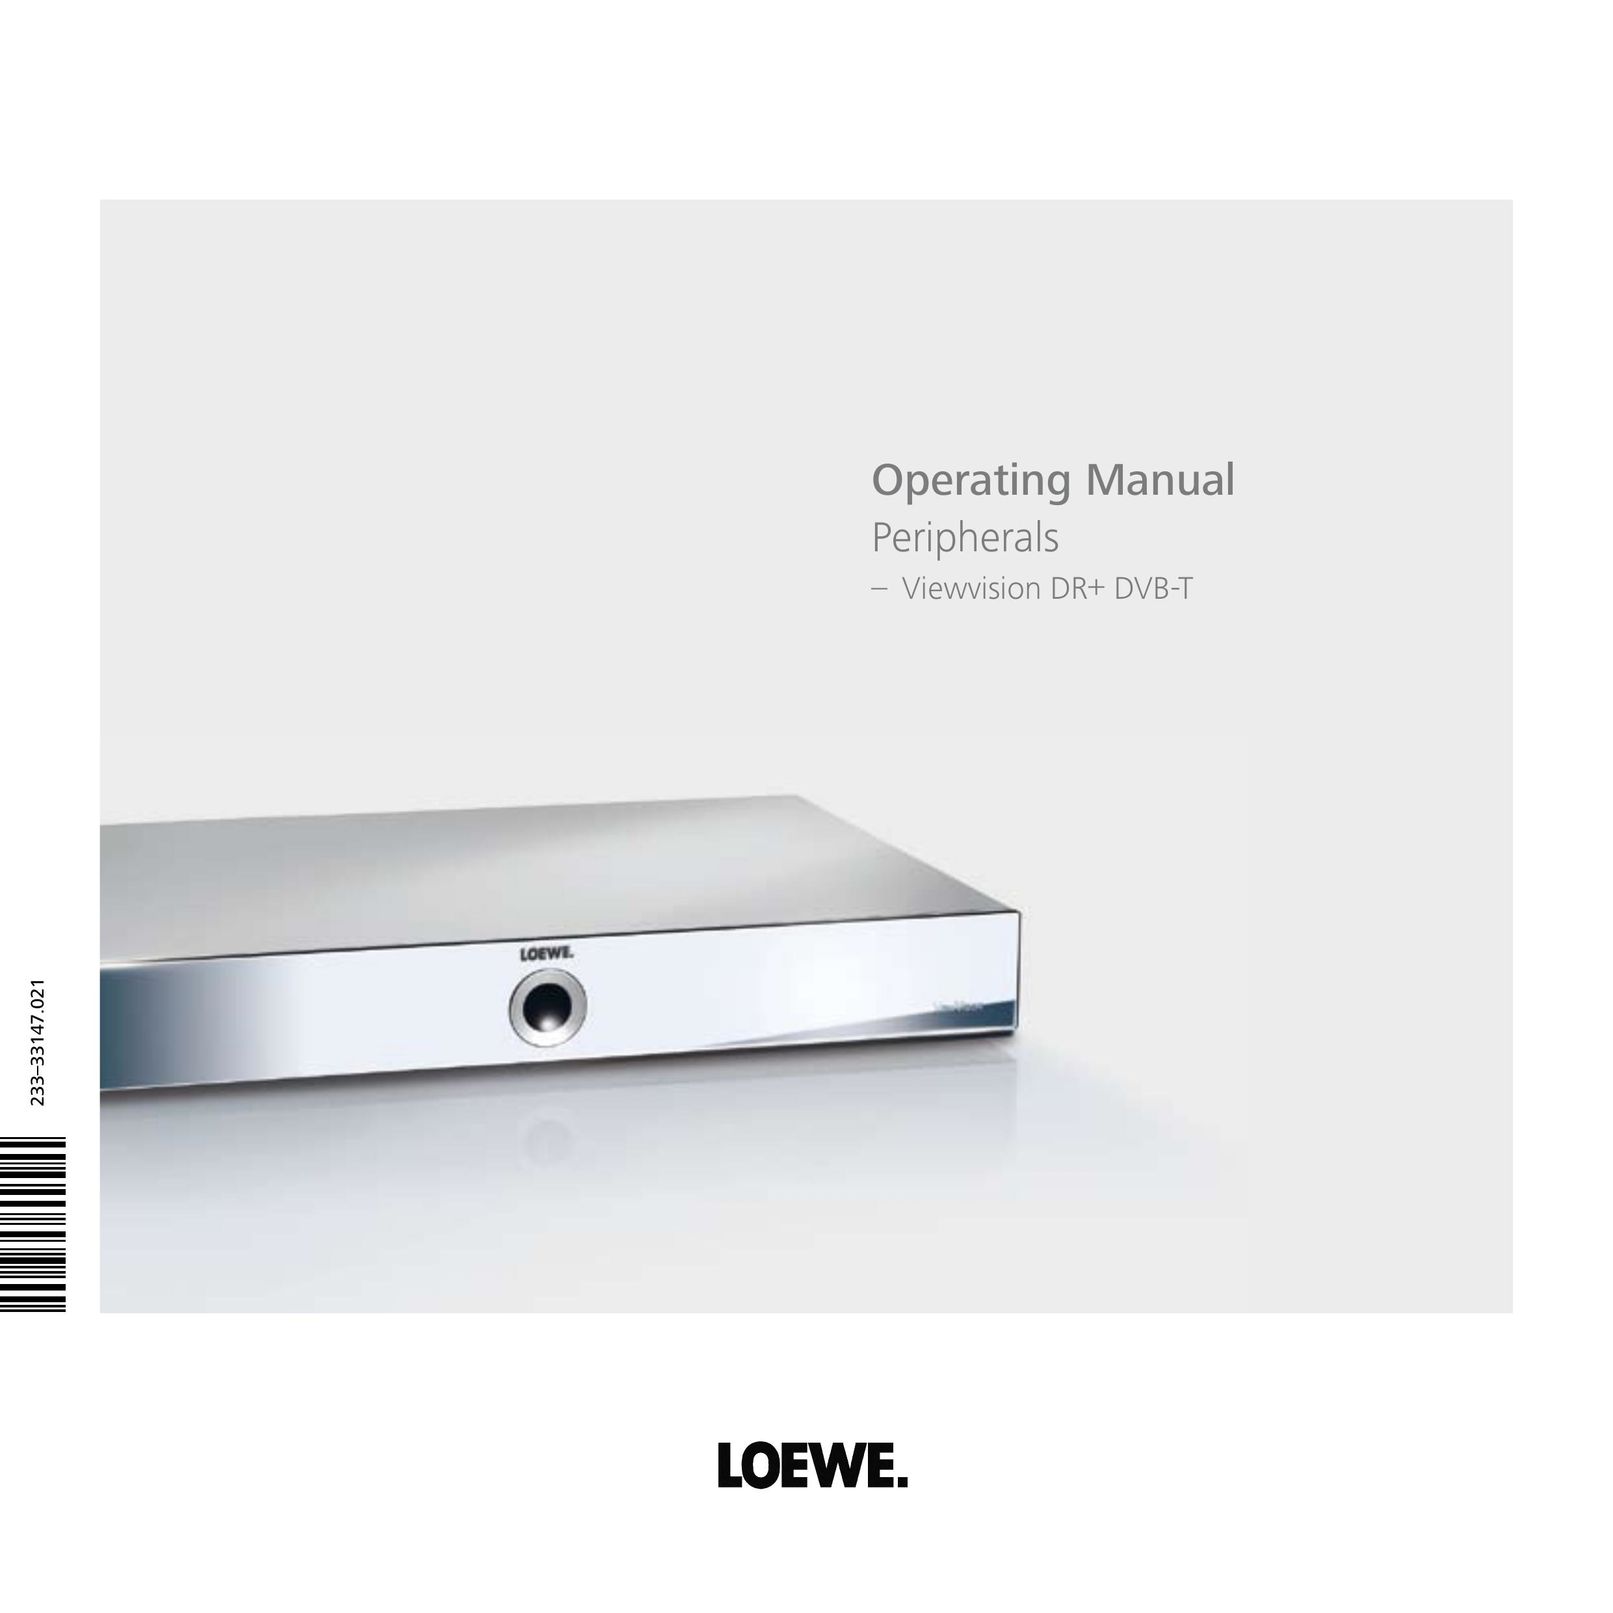 Loewe Viewvision DR+DVB-T DVR User Manual